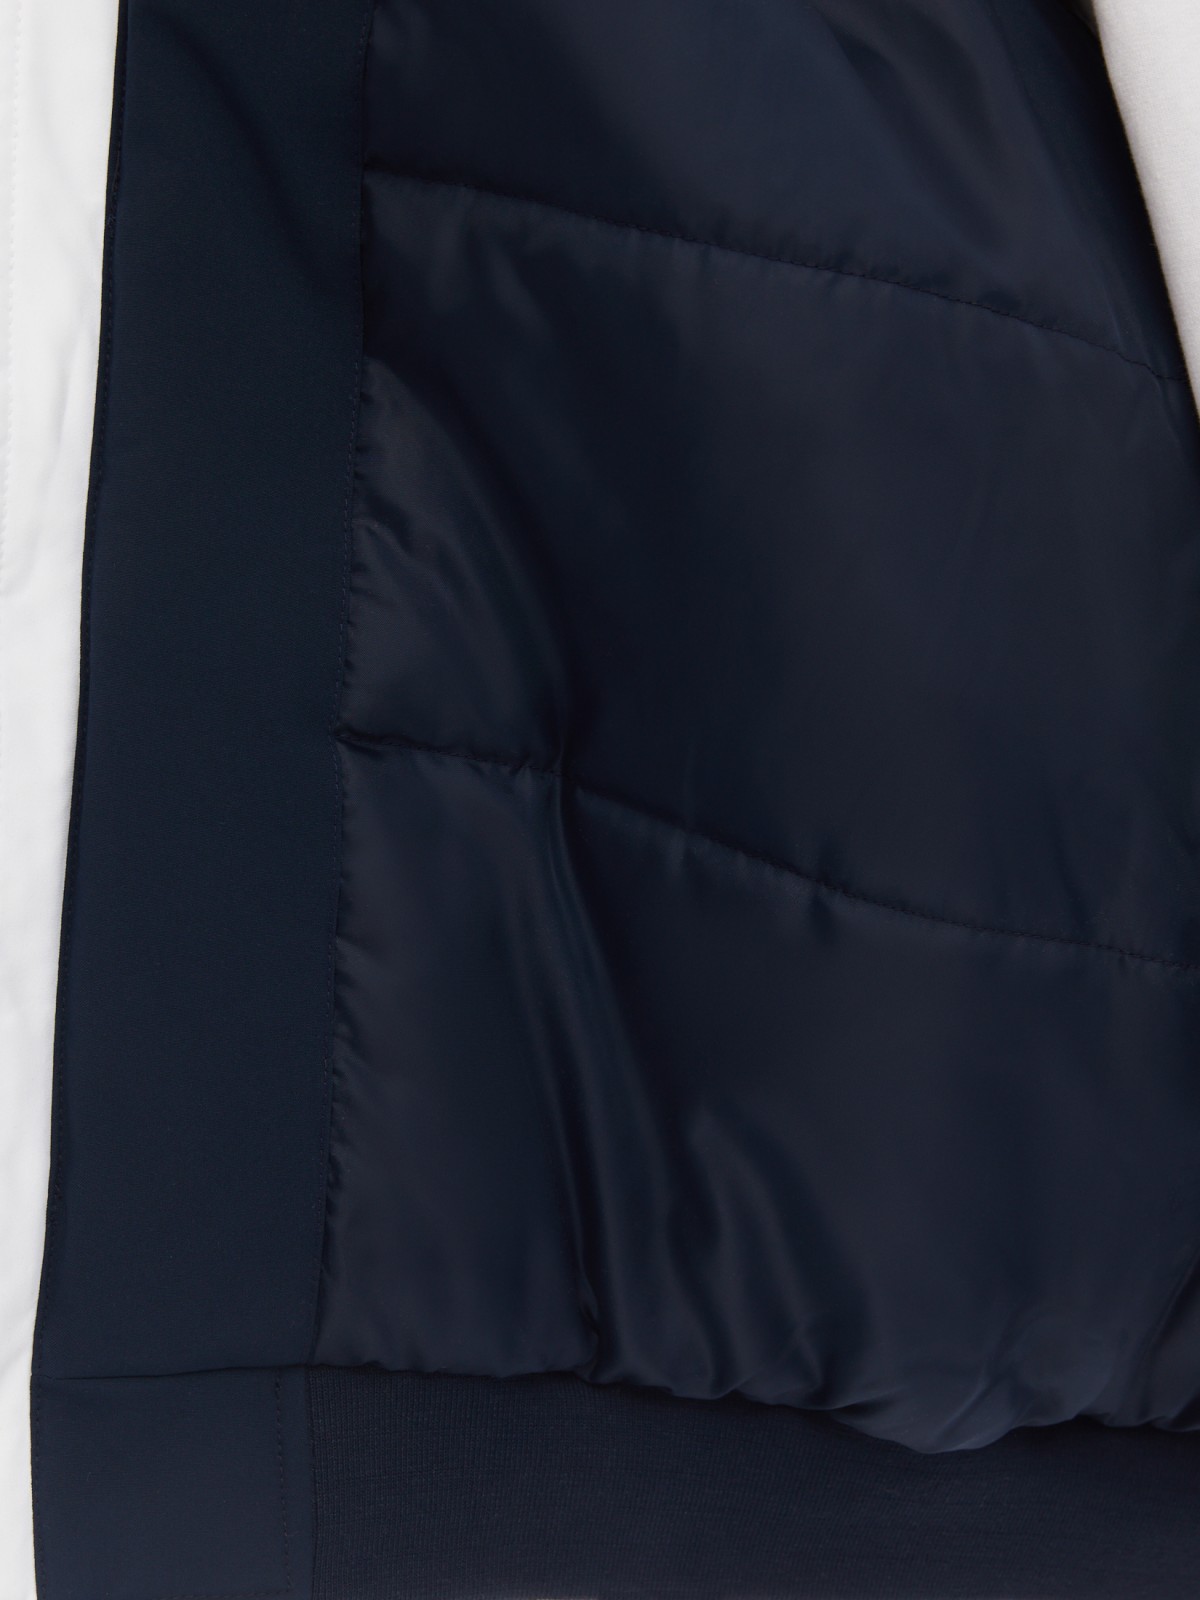 Утеплённая куртка-бомбер на синтепоне с капюшоном zolla 01412510L054, цвет синий, размер L - фото 5